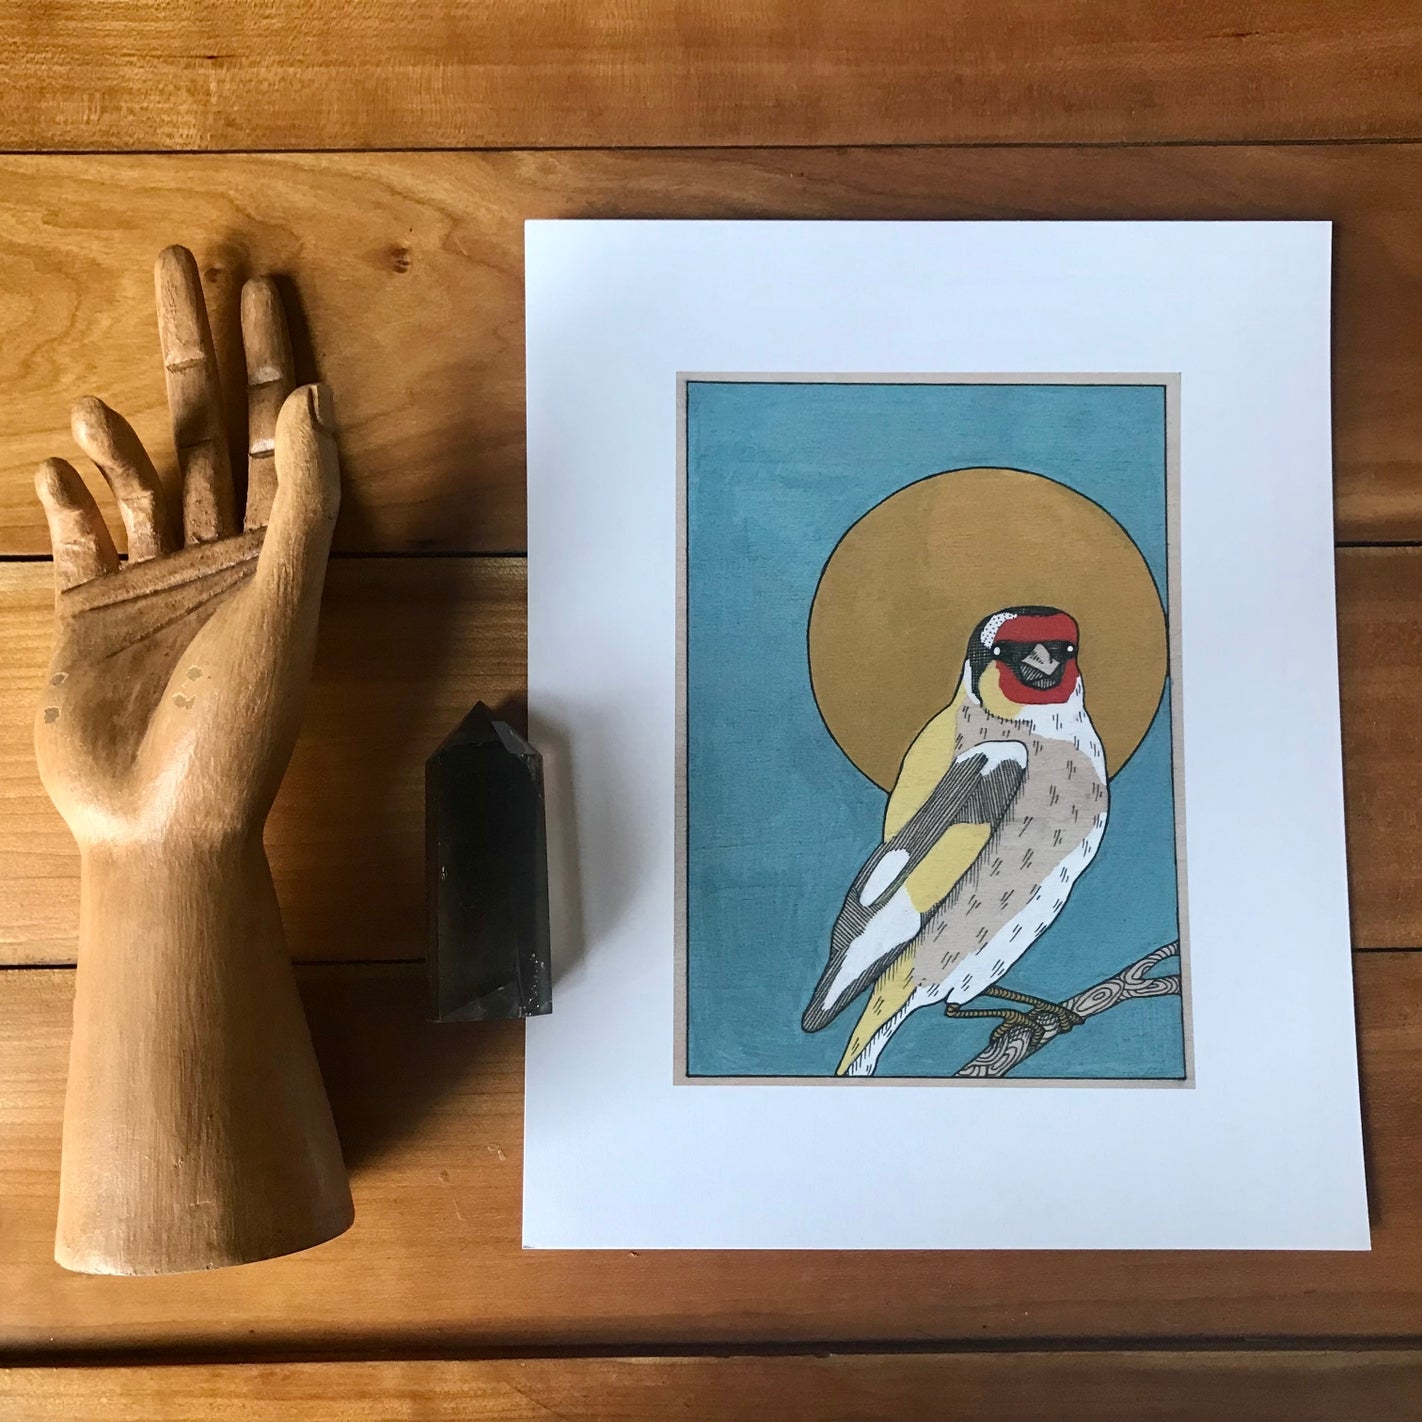 Goldfinch I Print